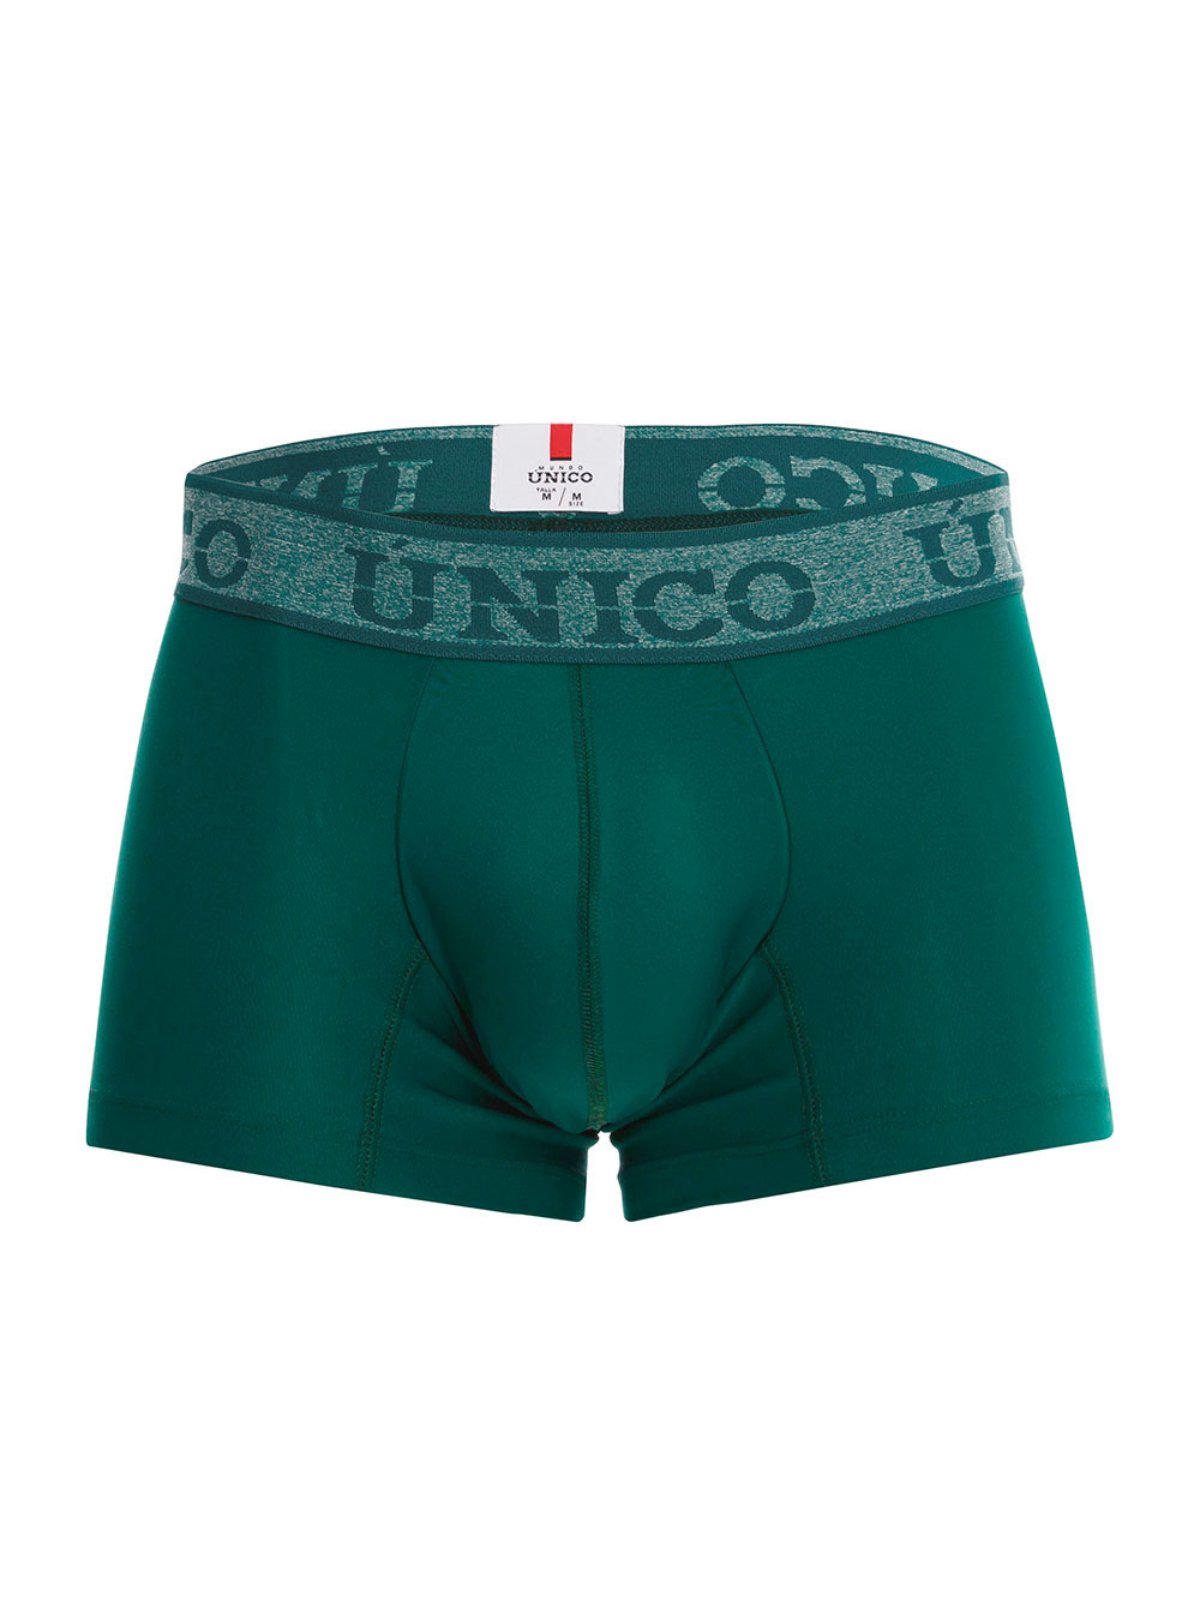 Boxer Cup Short Emerald